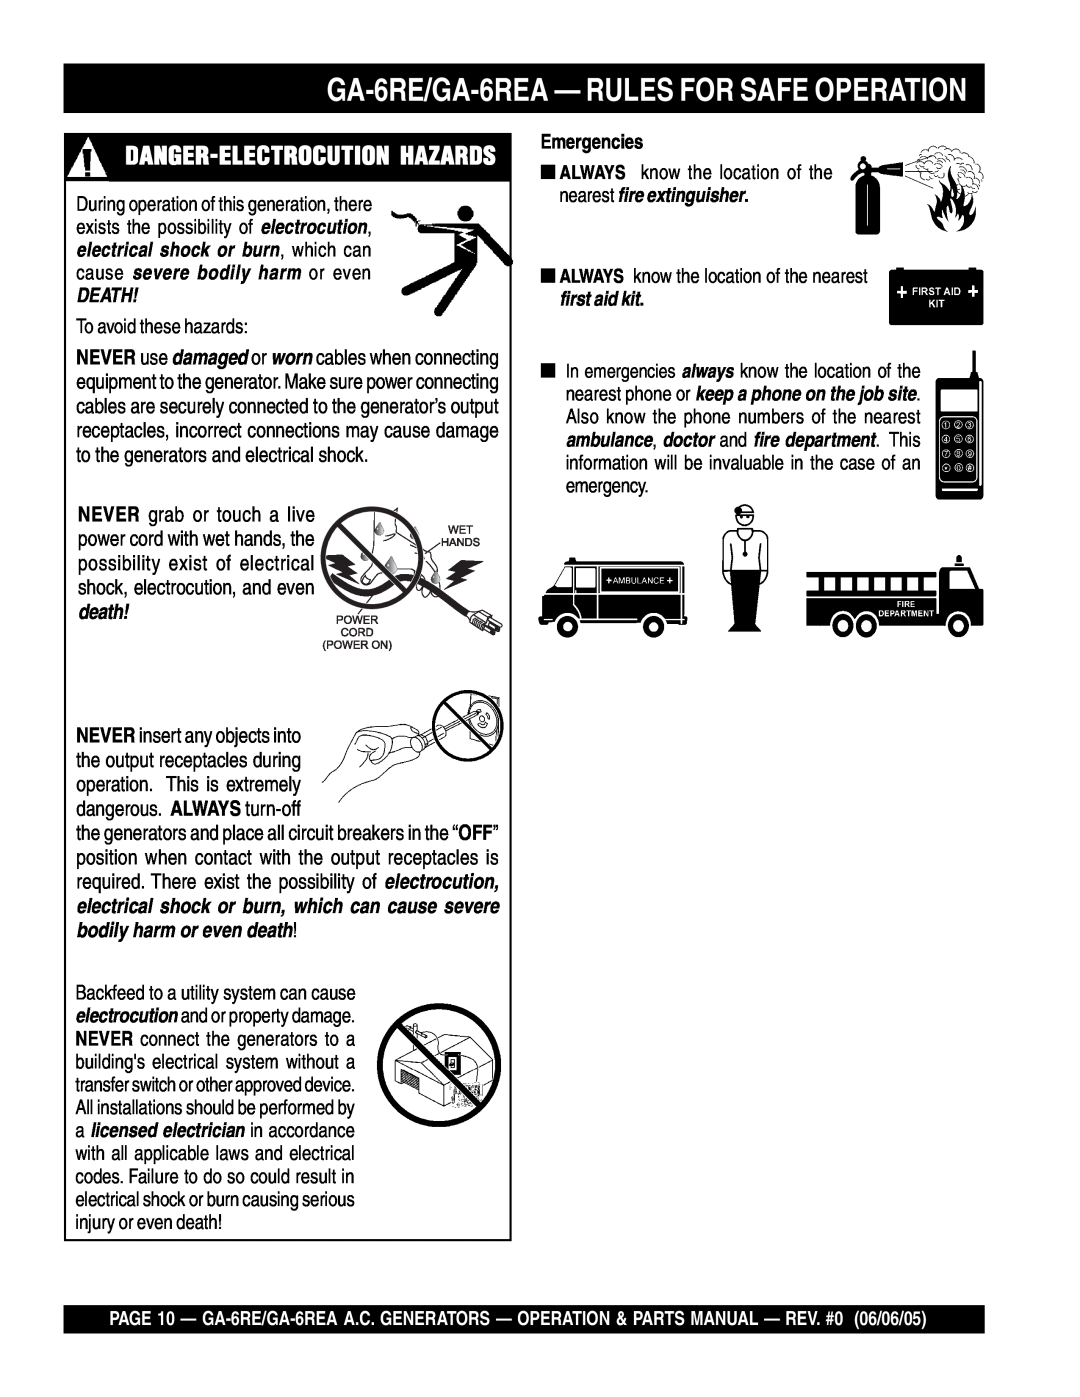 Multiquip manual GA-6RE/GA-6REA- RULES FOR SAFE OPERATION, Danger-Electrocutionhazards, Death, Emergencies 